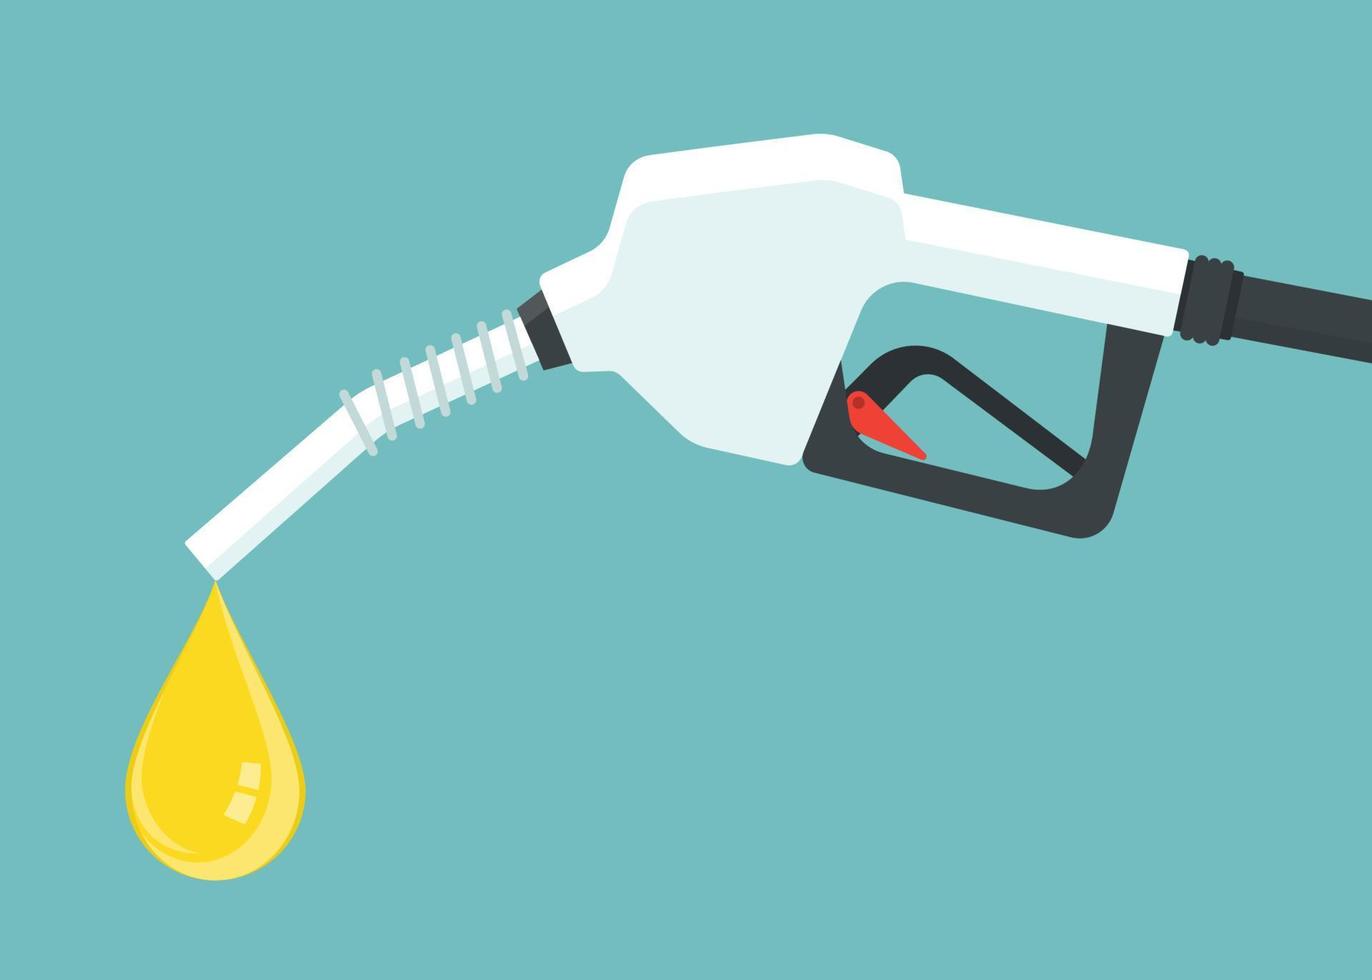 Boquilla de bomba de gasolina con goteo de aceite. ilustración vectorial vector